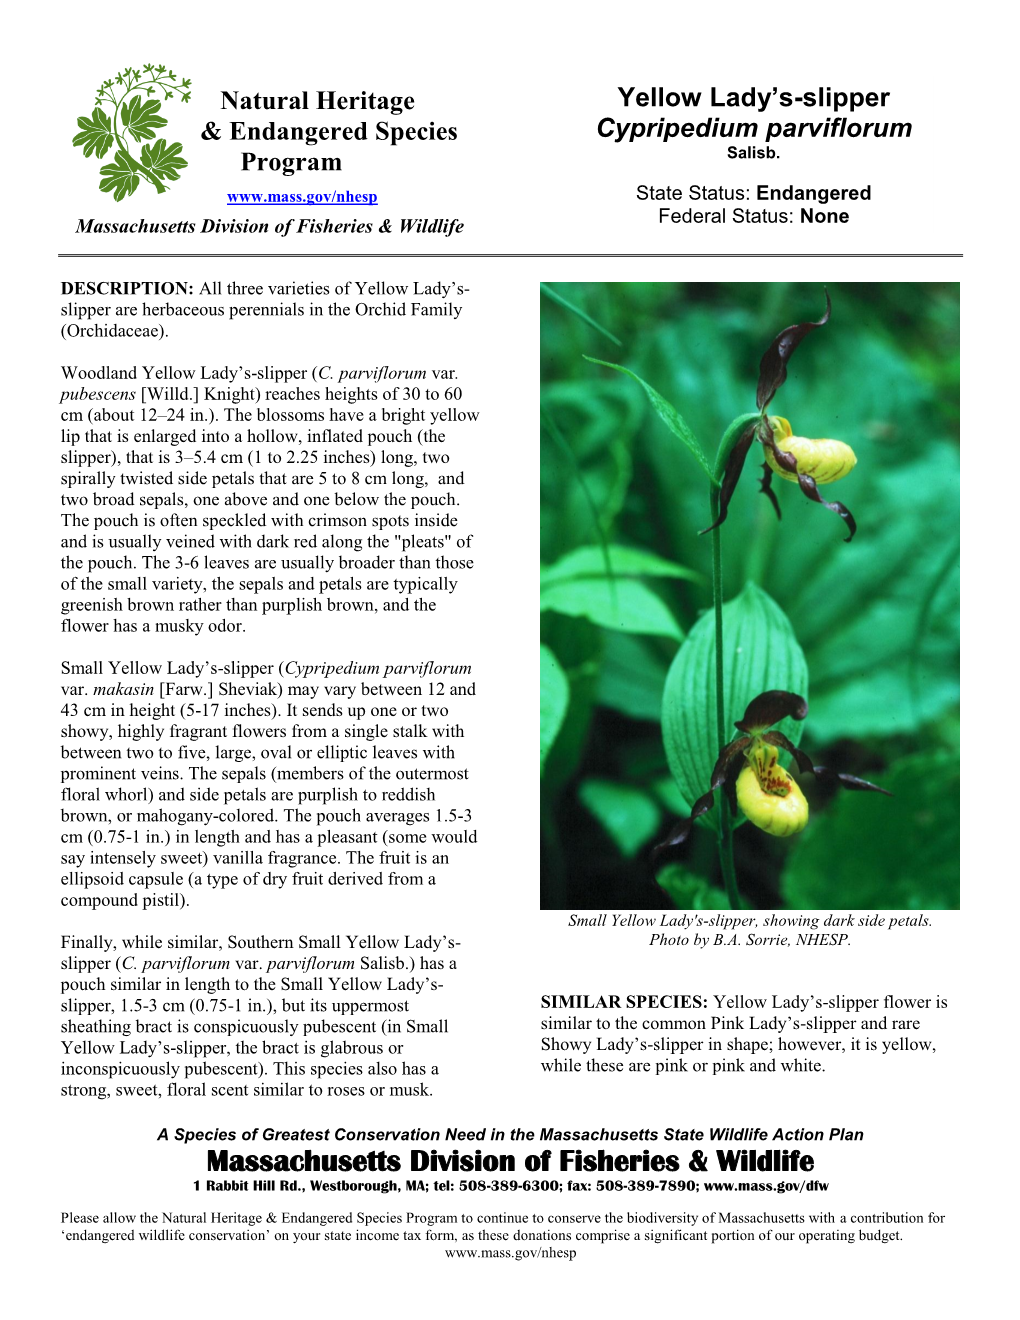 Yellow Lady's-Slipper Cypripedium Parviflorum